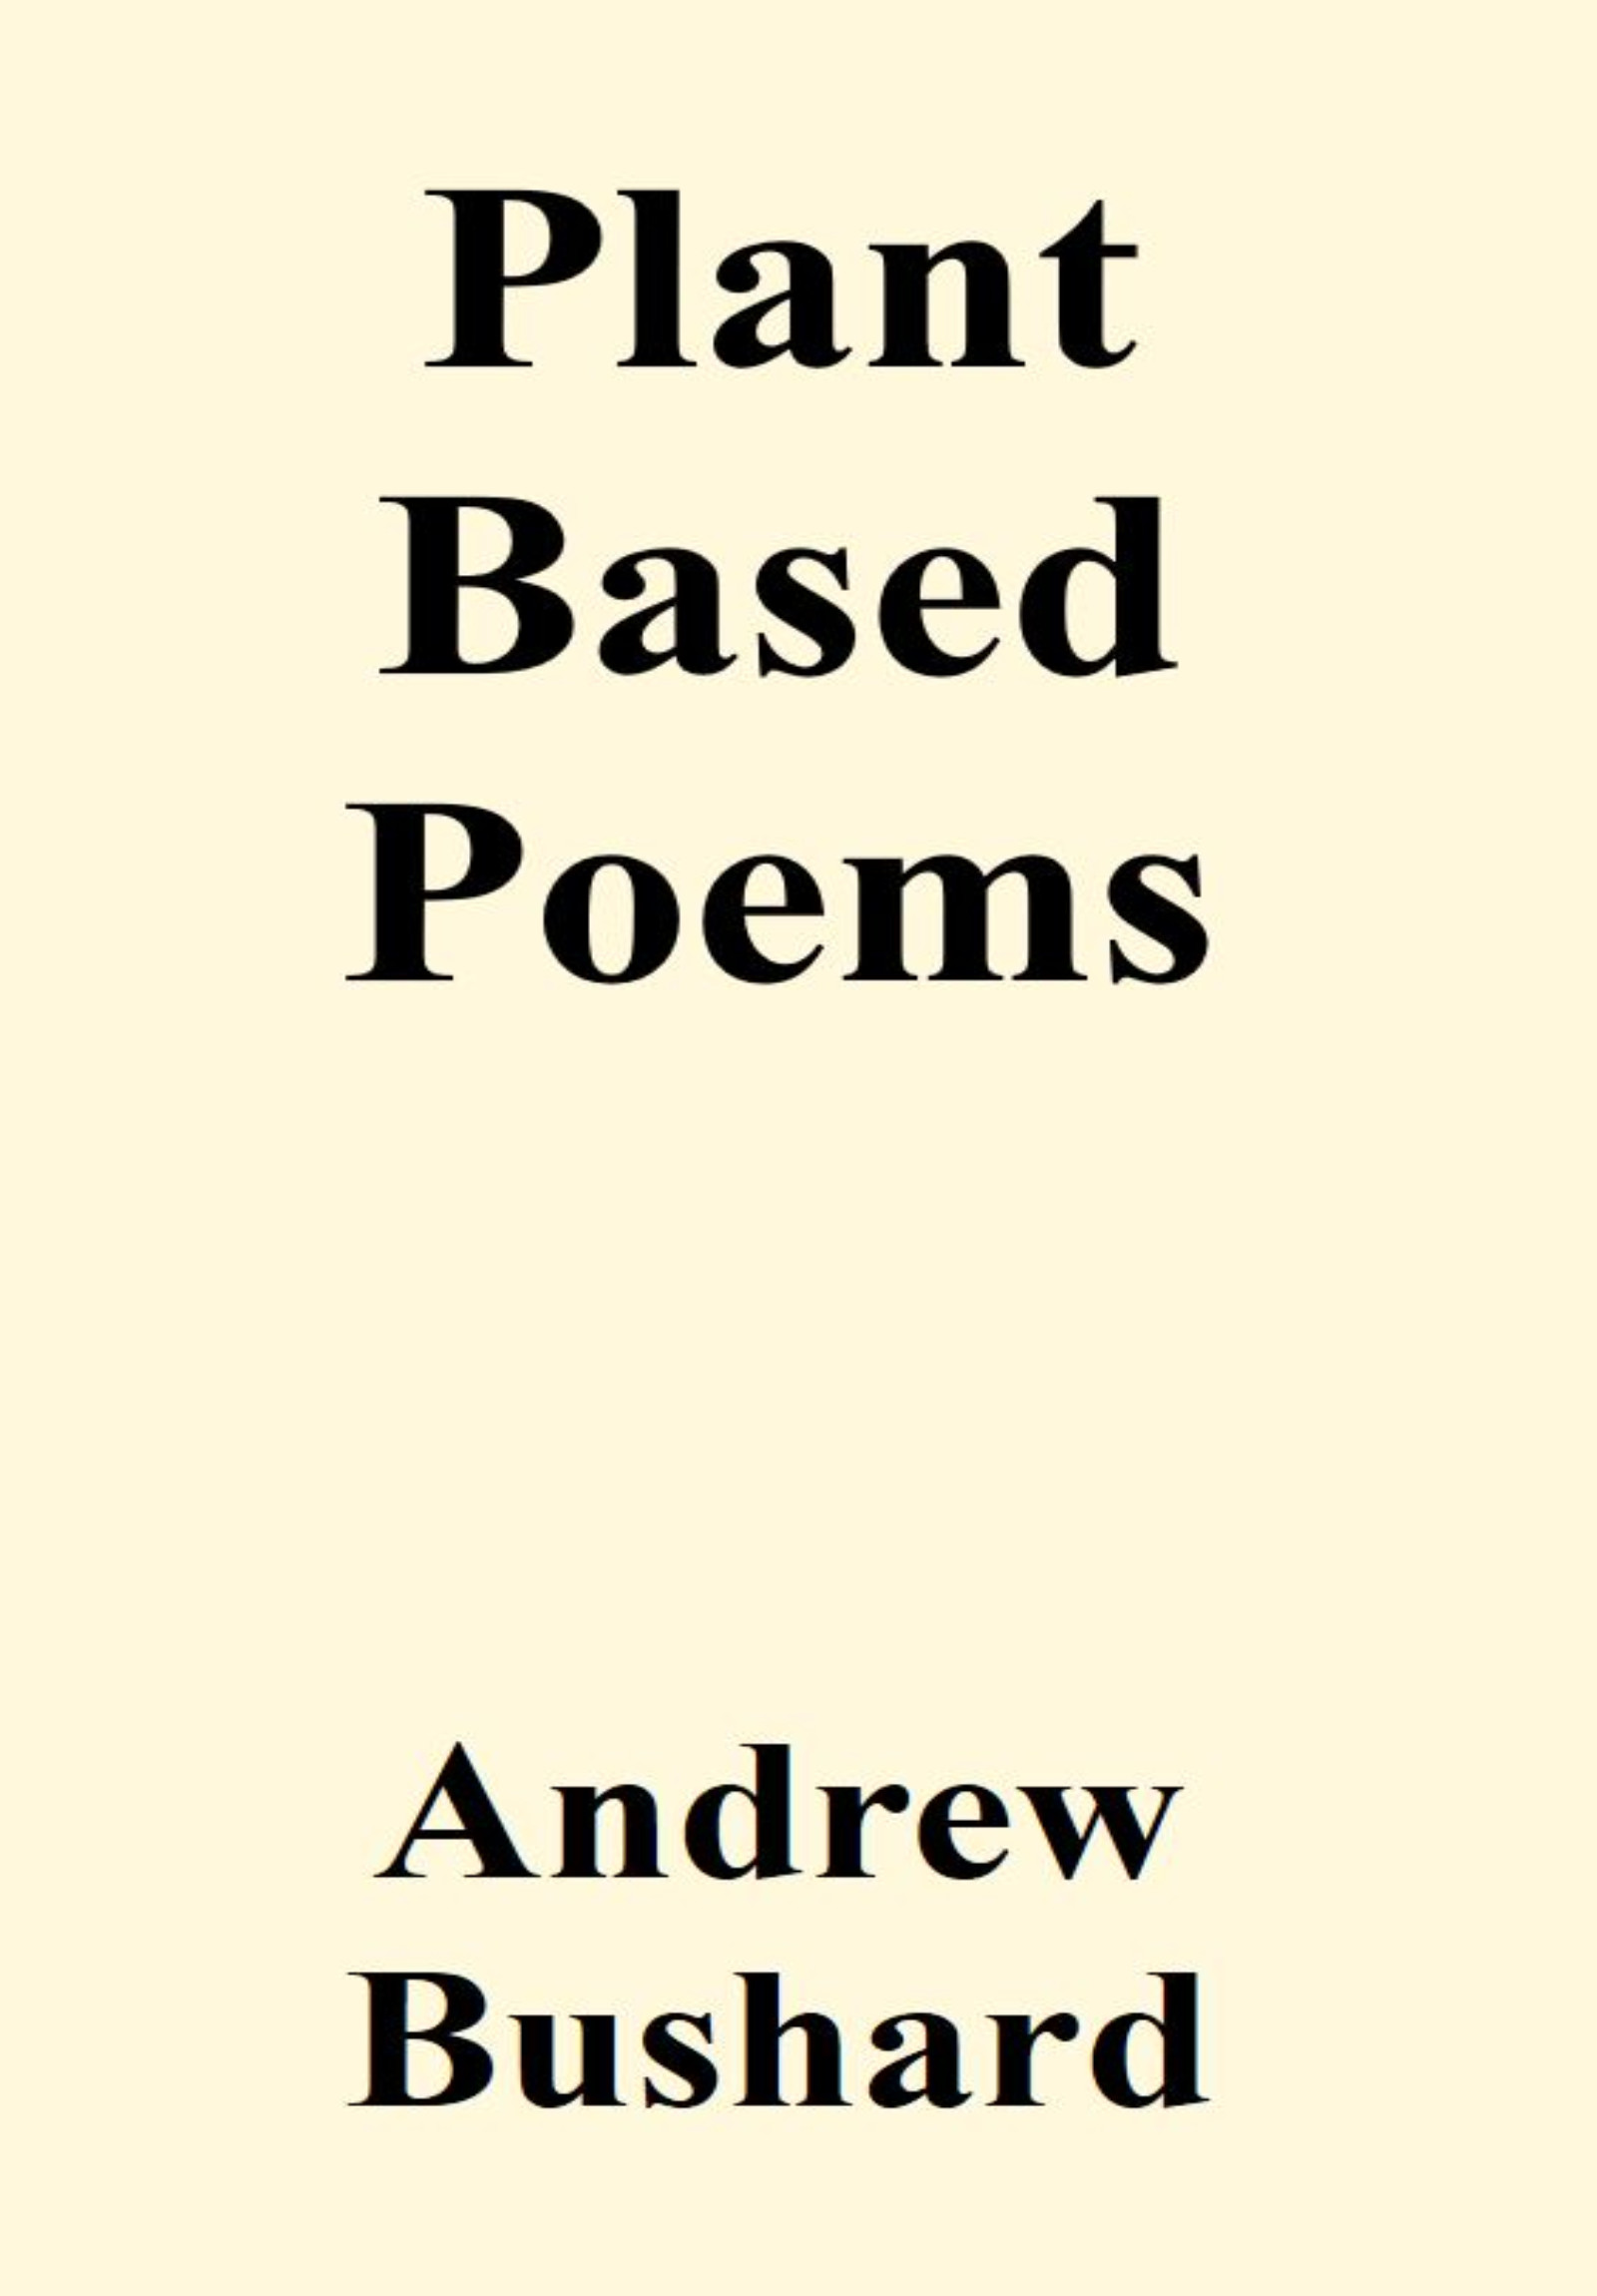 Plant Based Poems Audiobook